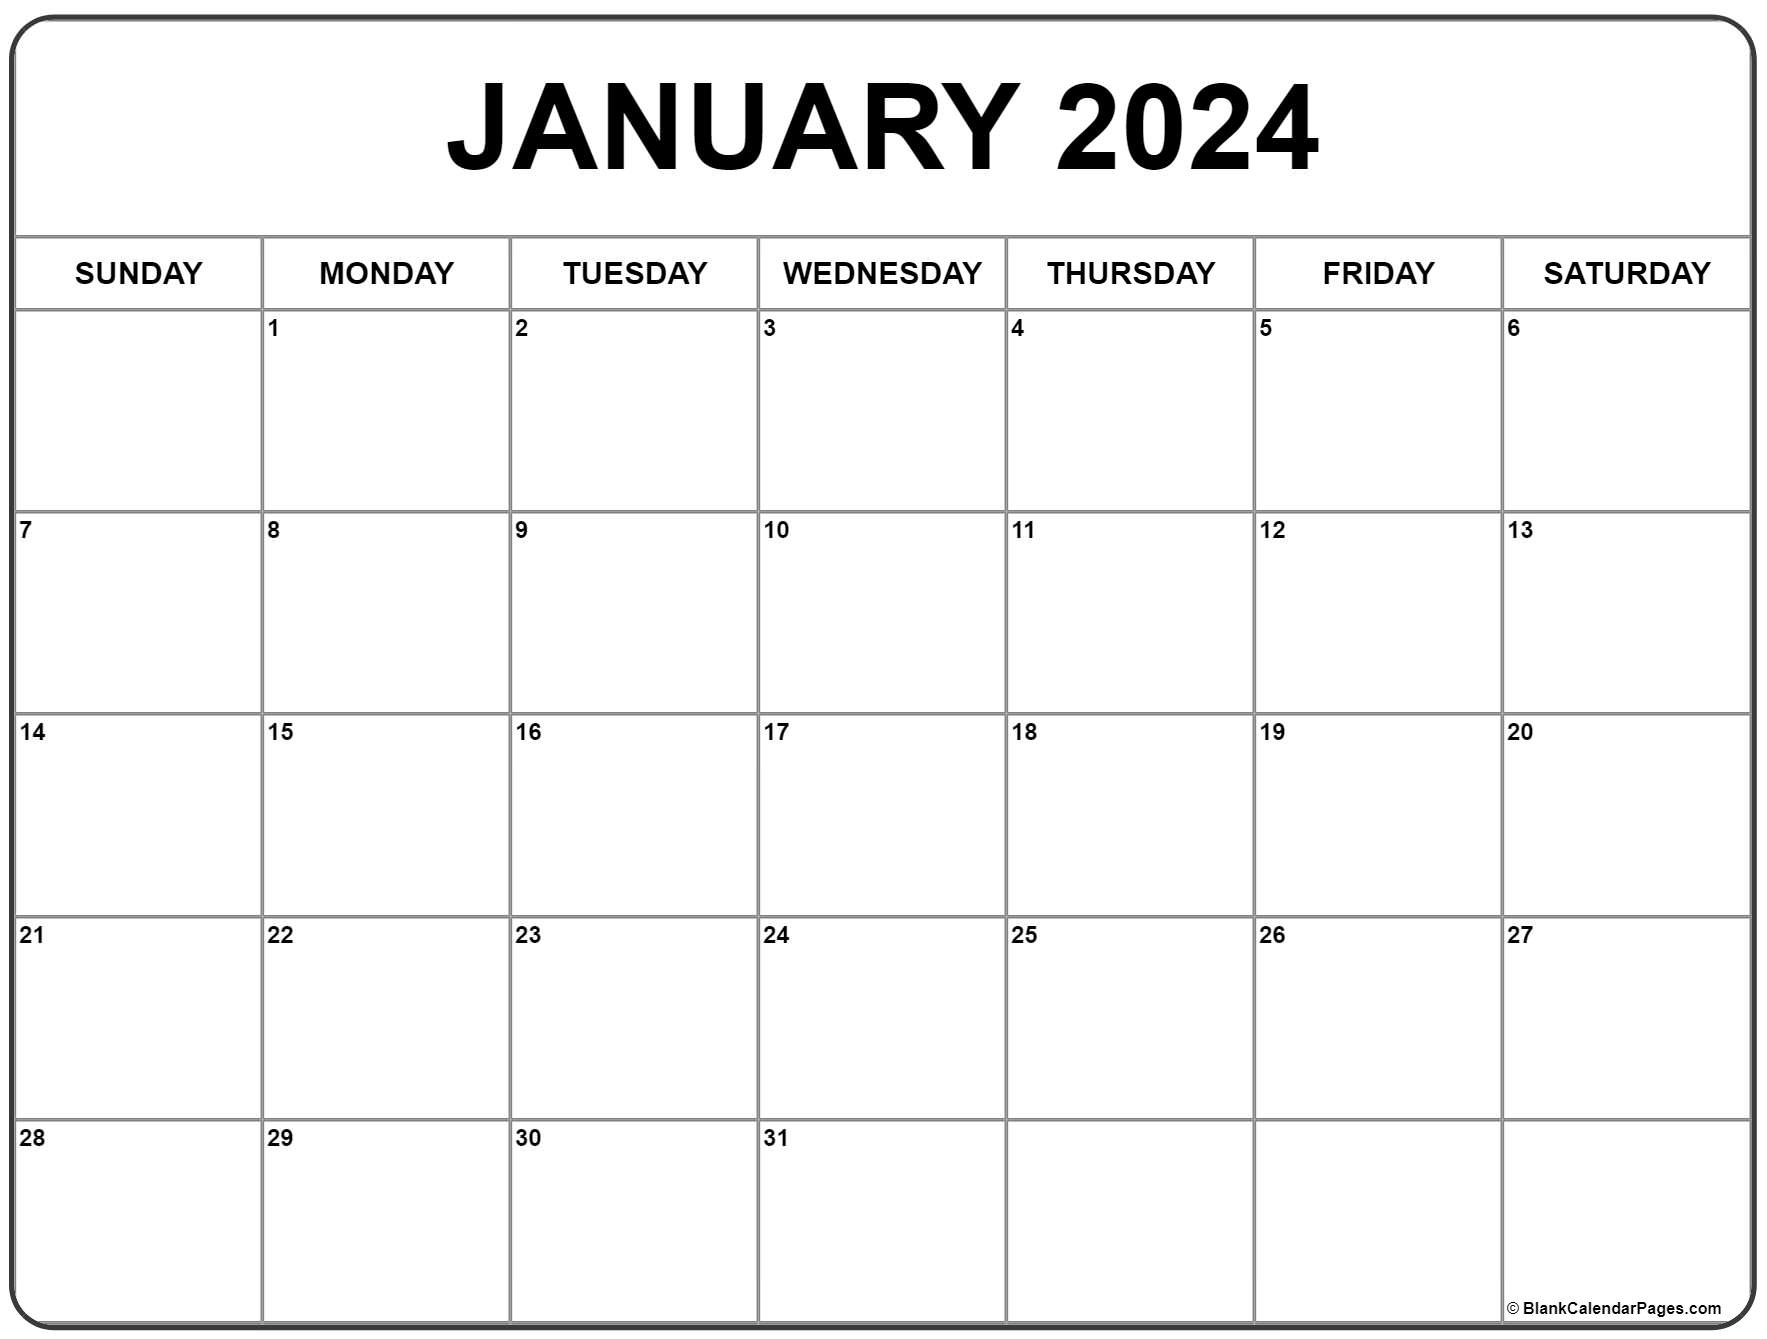 January 2024 Calendar | Free Printable Calendar for Printable 2024 Calendar By Month